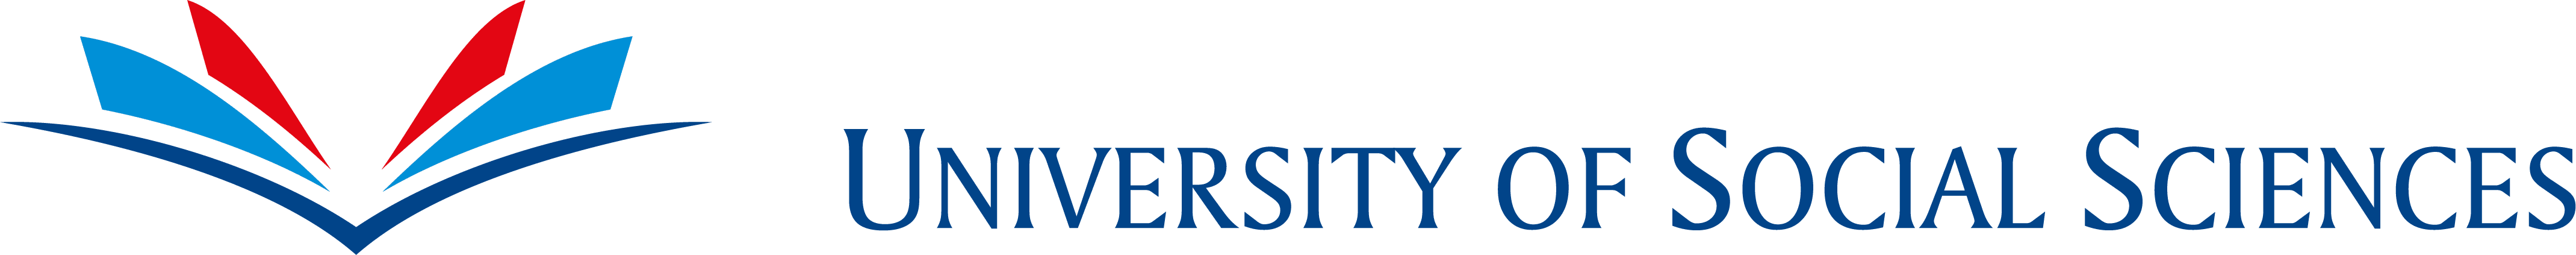 News - University of Social Sciences - University of Social Sciences - University of SAN